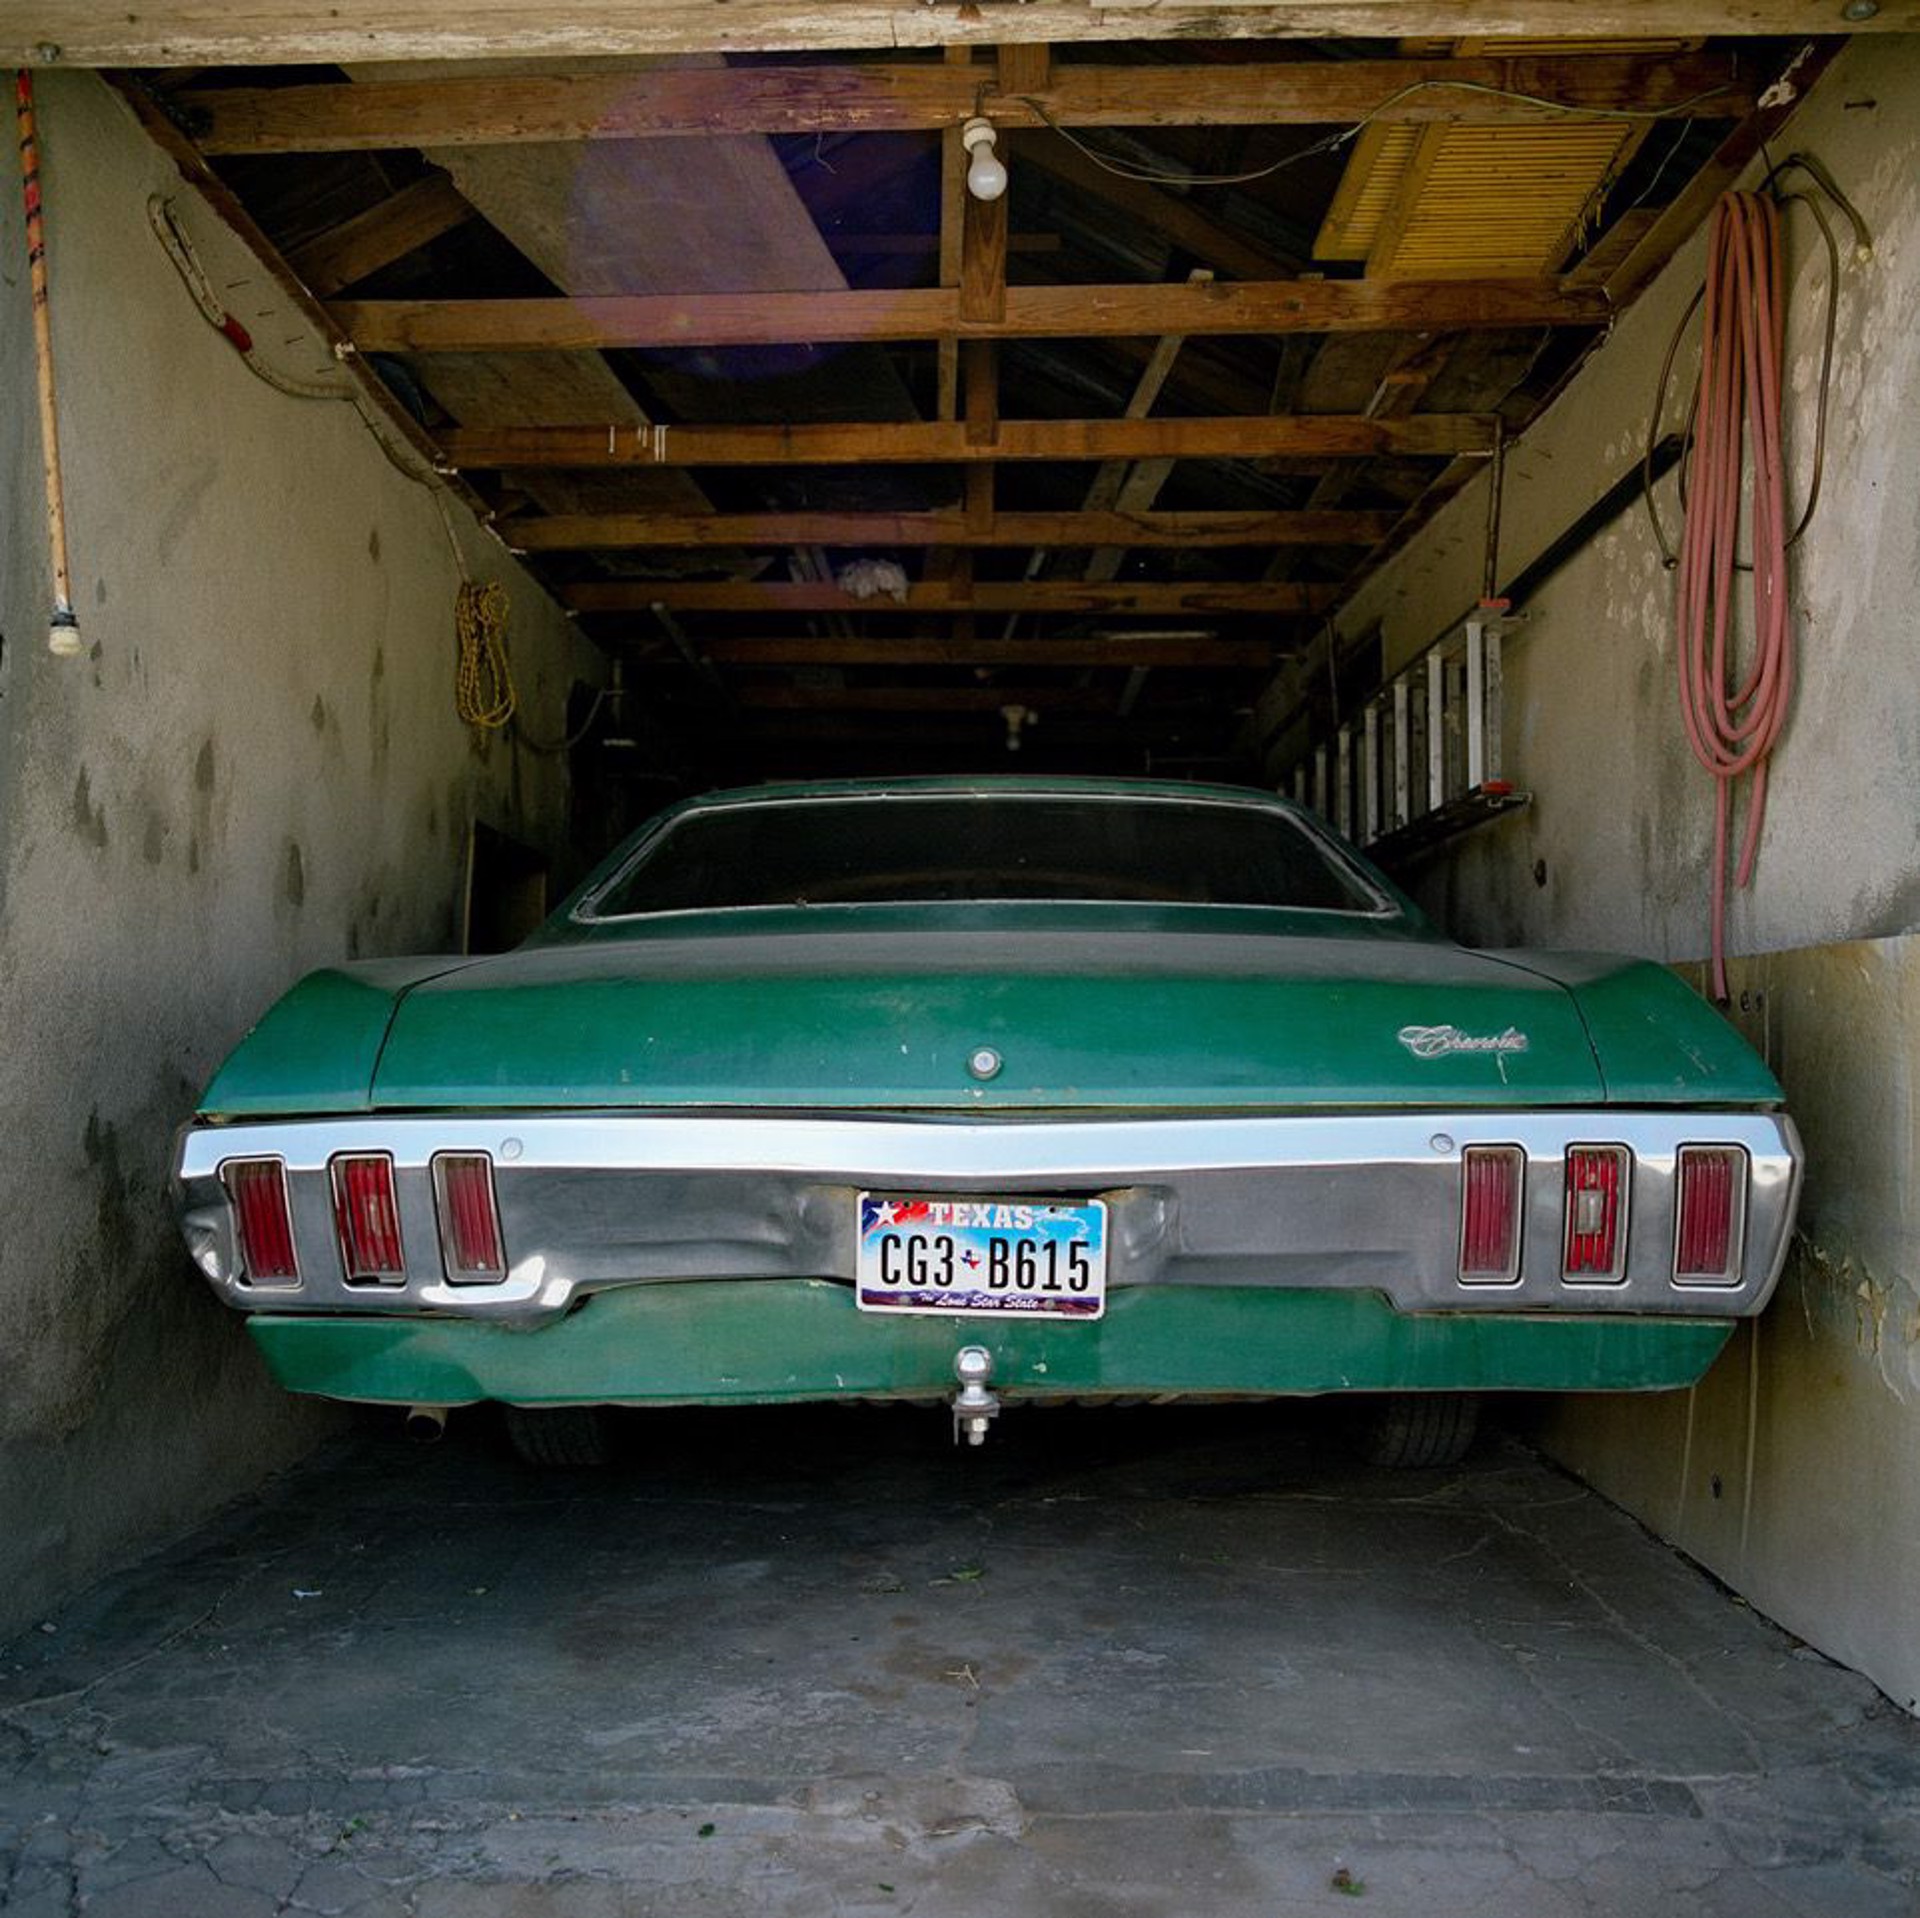 Green Car in Garage by Allison V. Smith